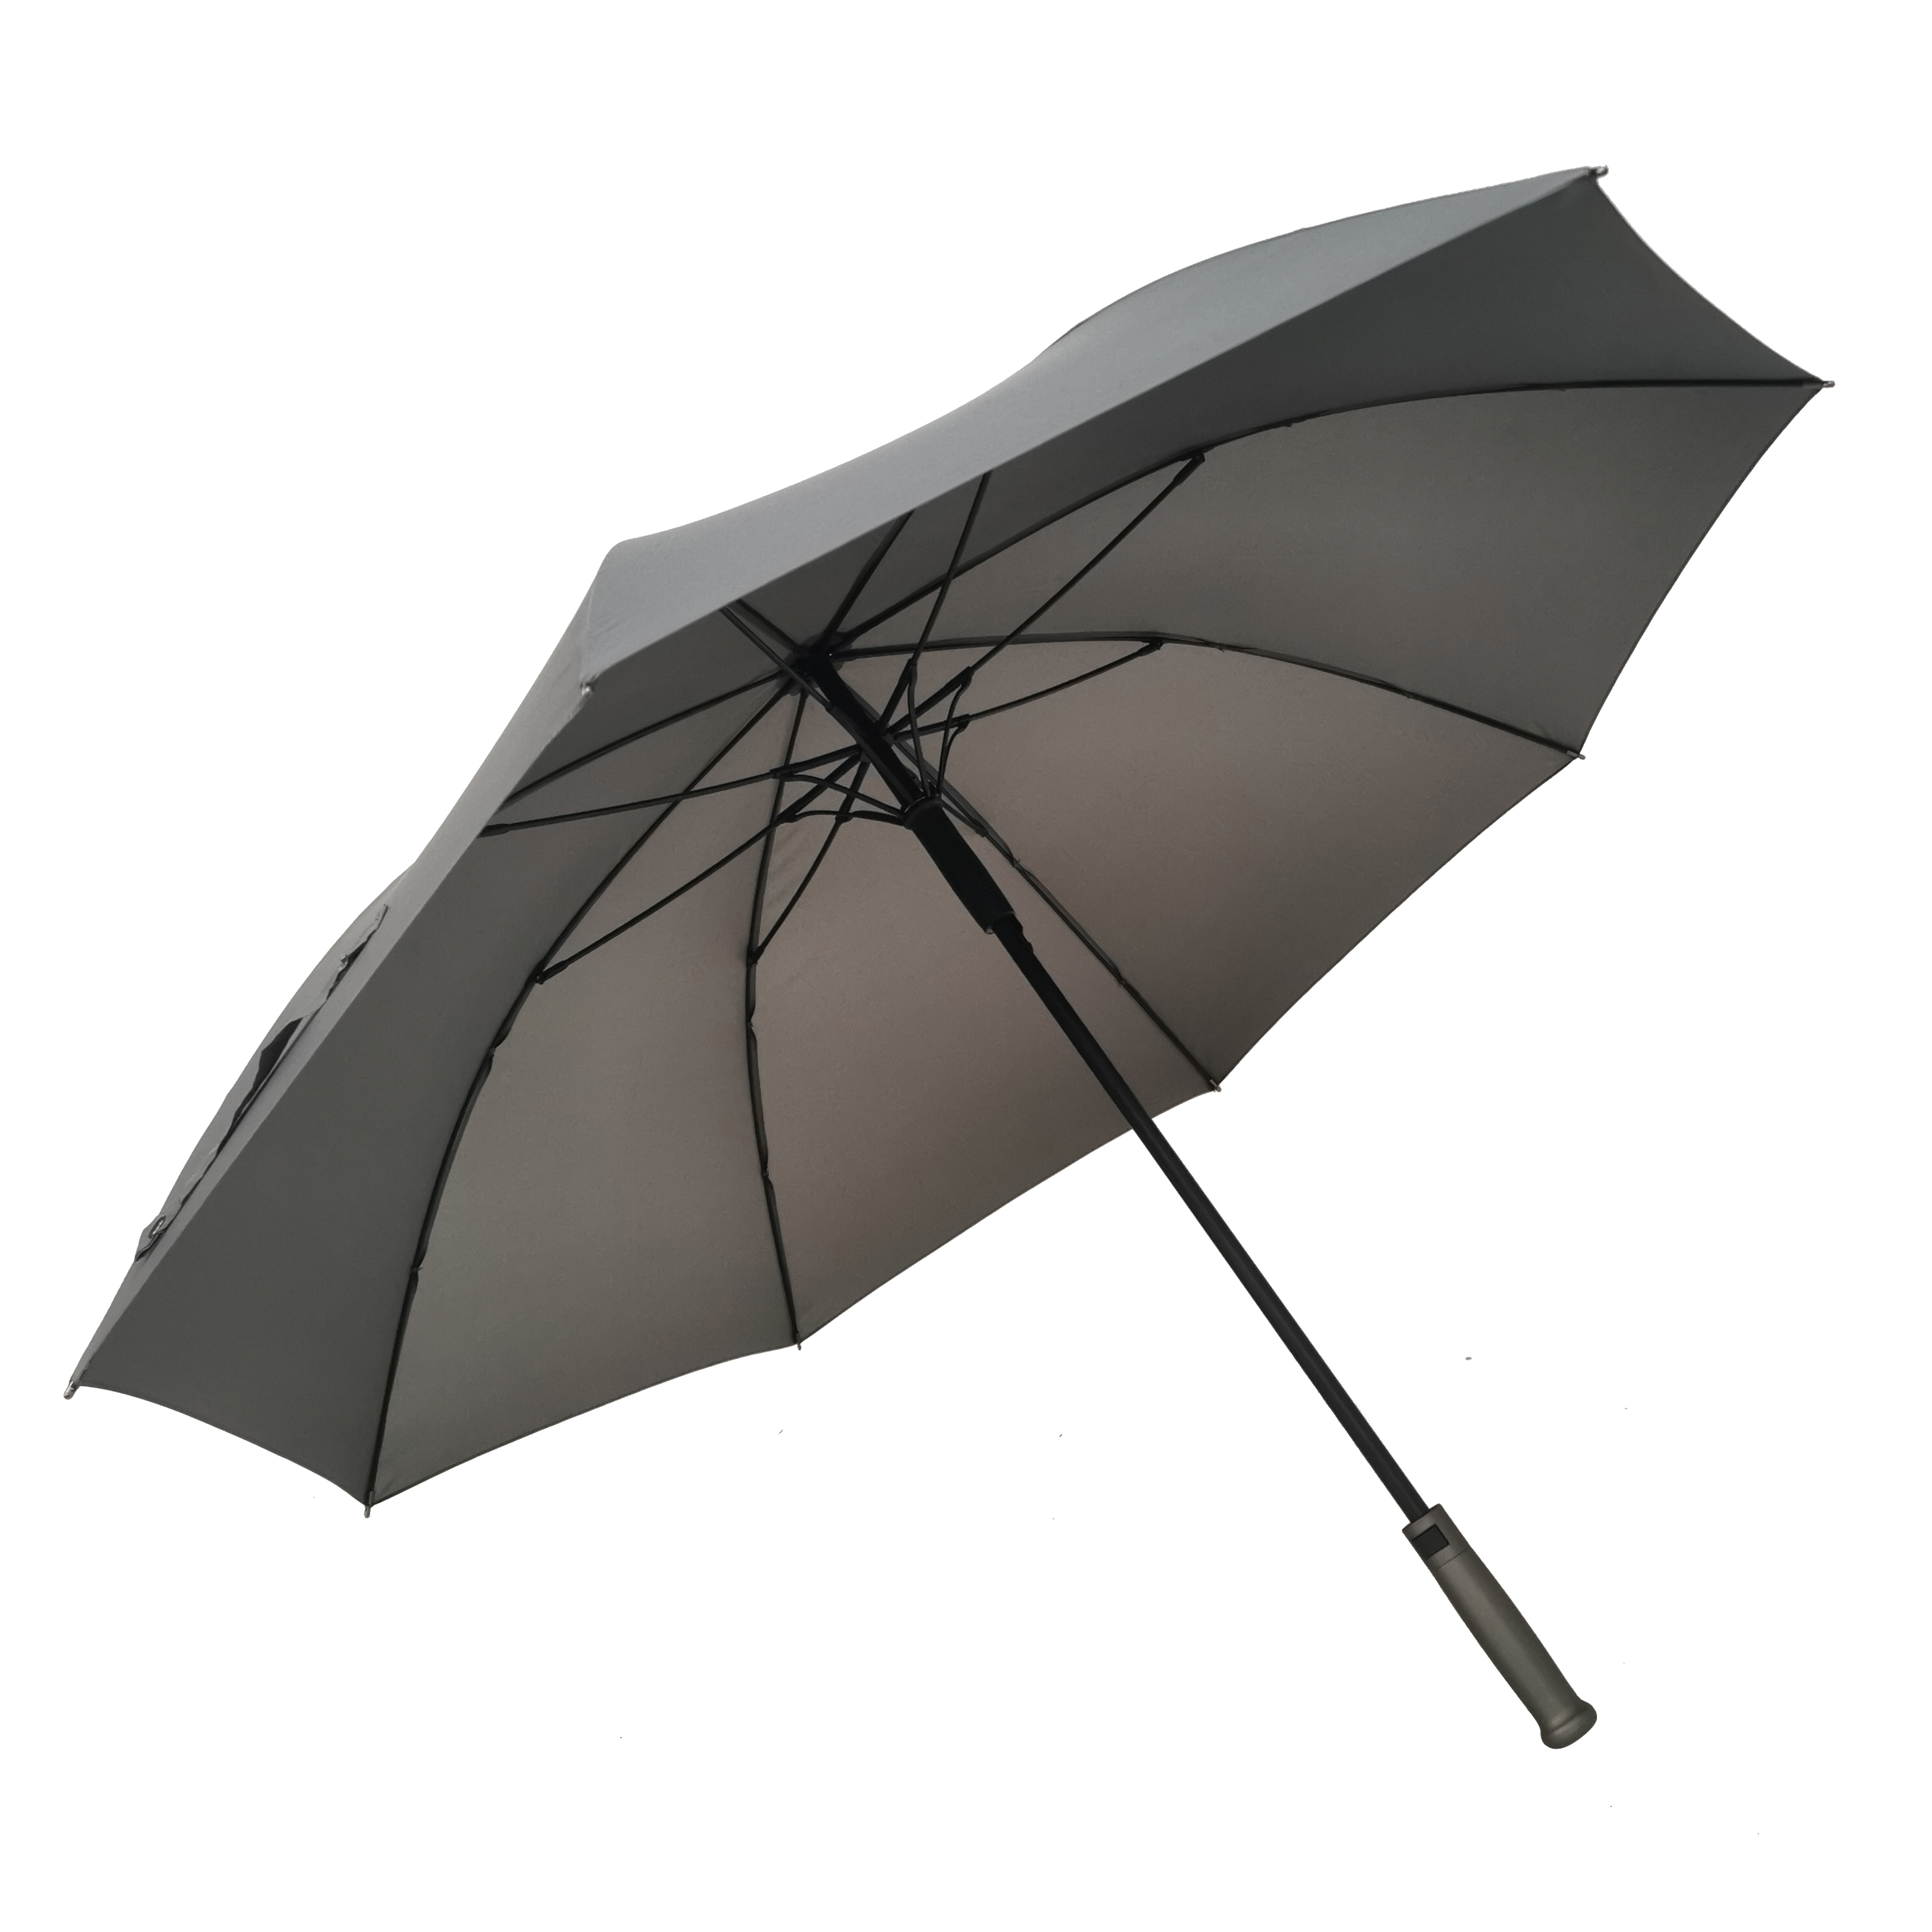 https://www.hodaumbrella.com/low-key-luxury-ubucuruzi-style-golf-umbrella-product/